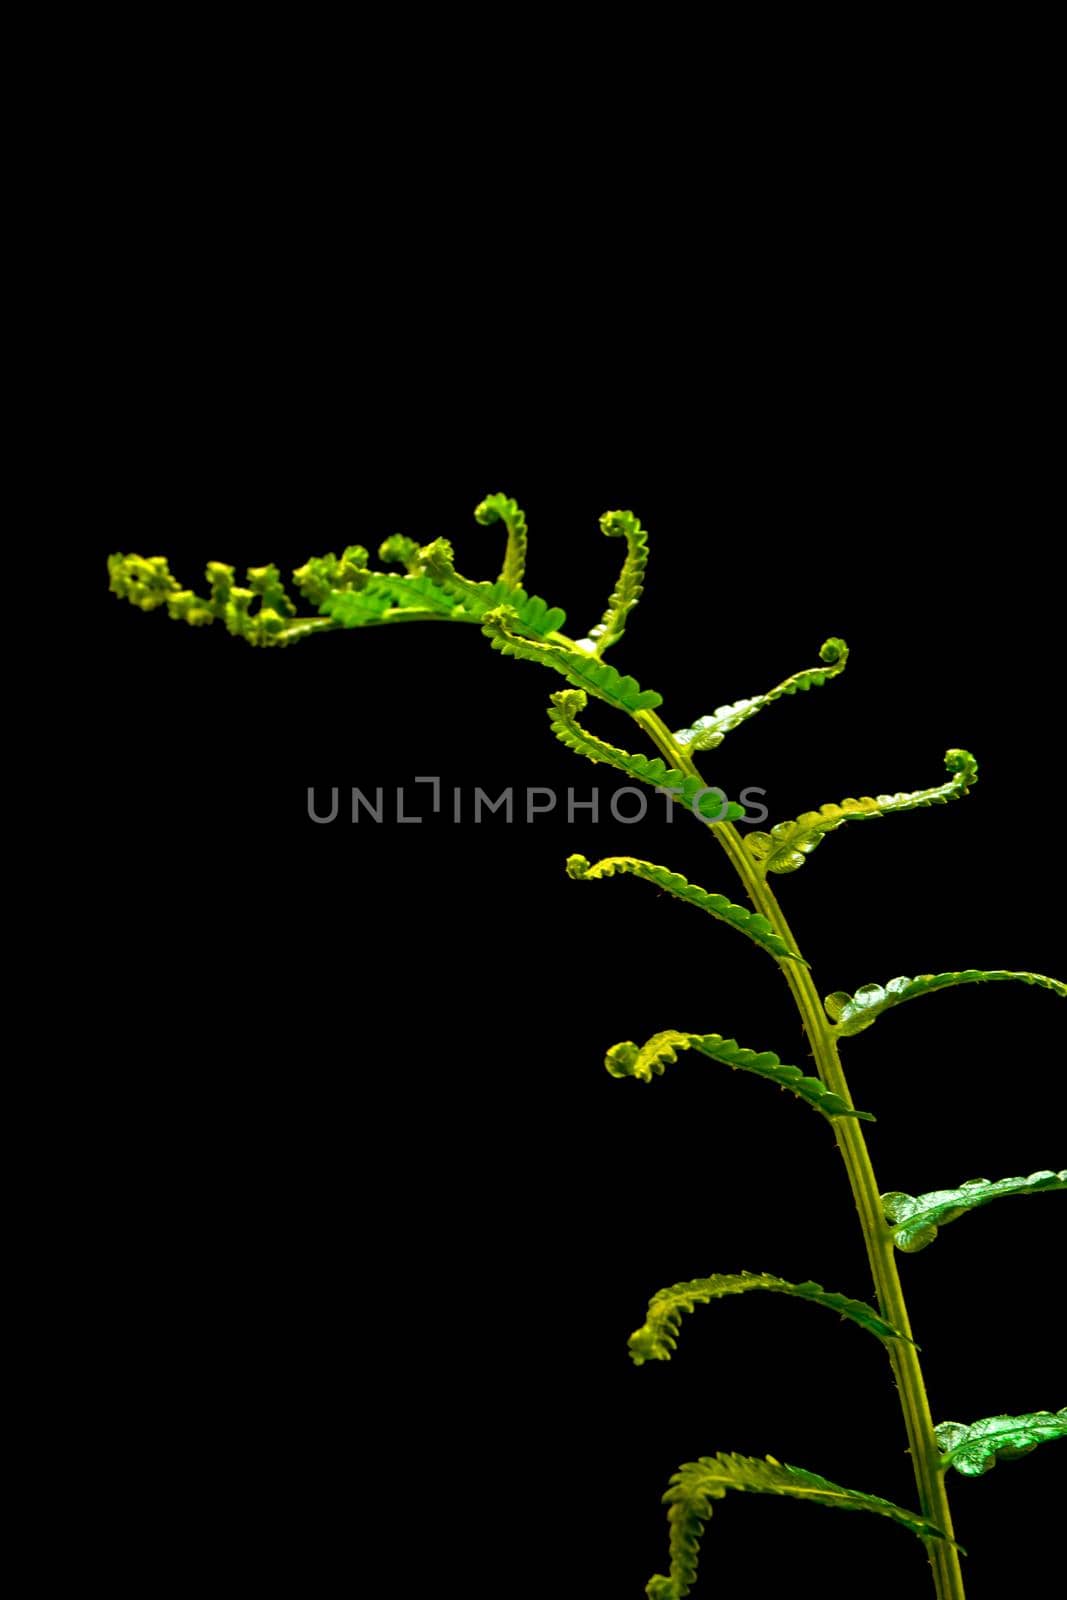 Freshness Green leaf of Fern on black background